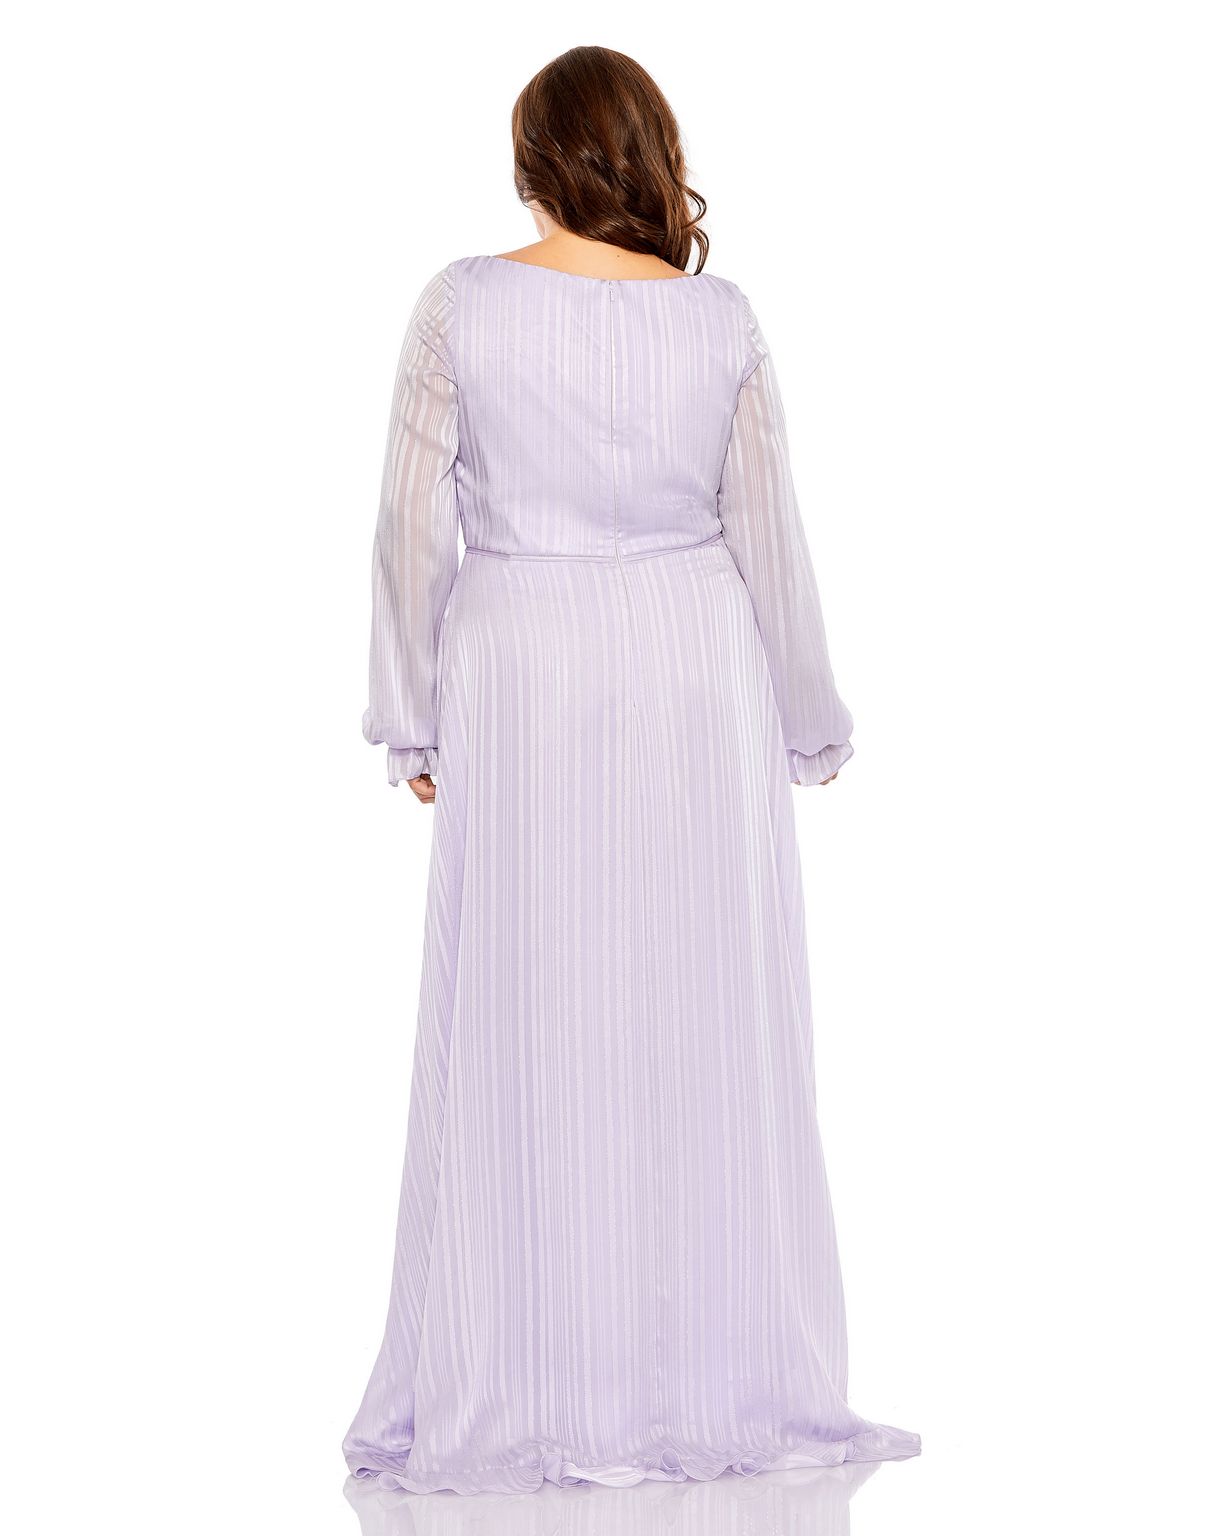 Plus Size Dresses Fabulouss High Low Plus Size Dress Lilac